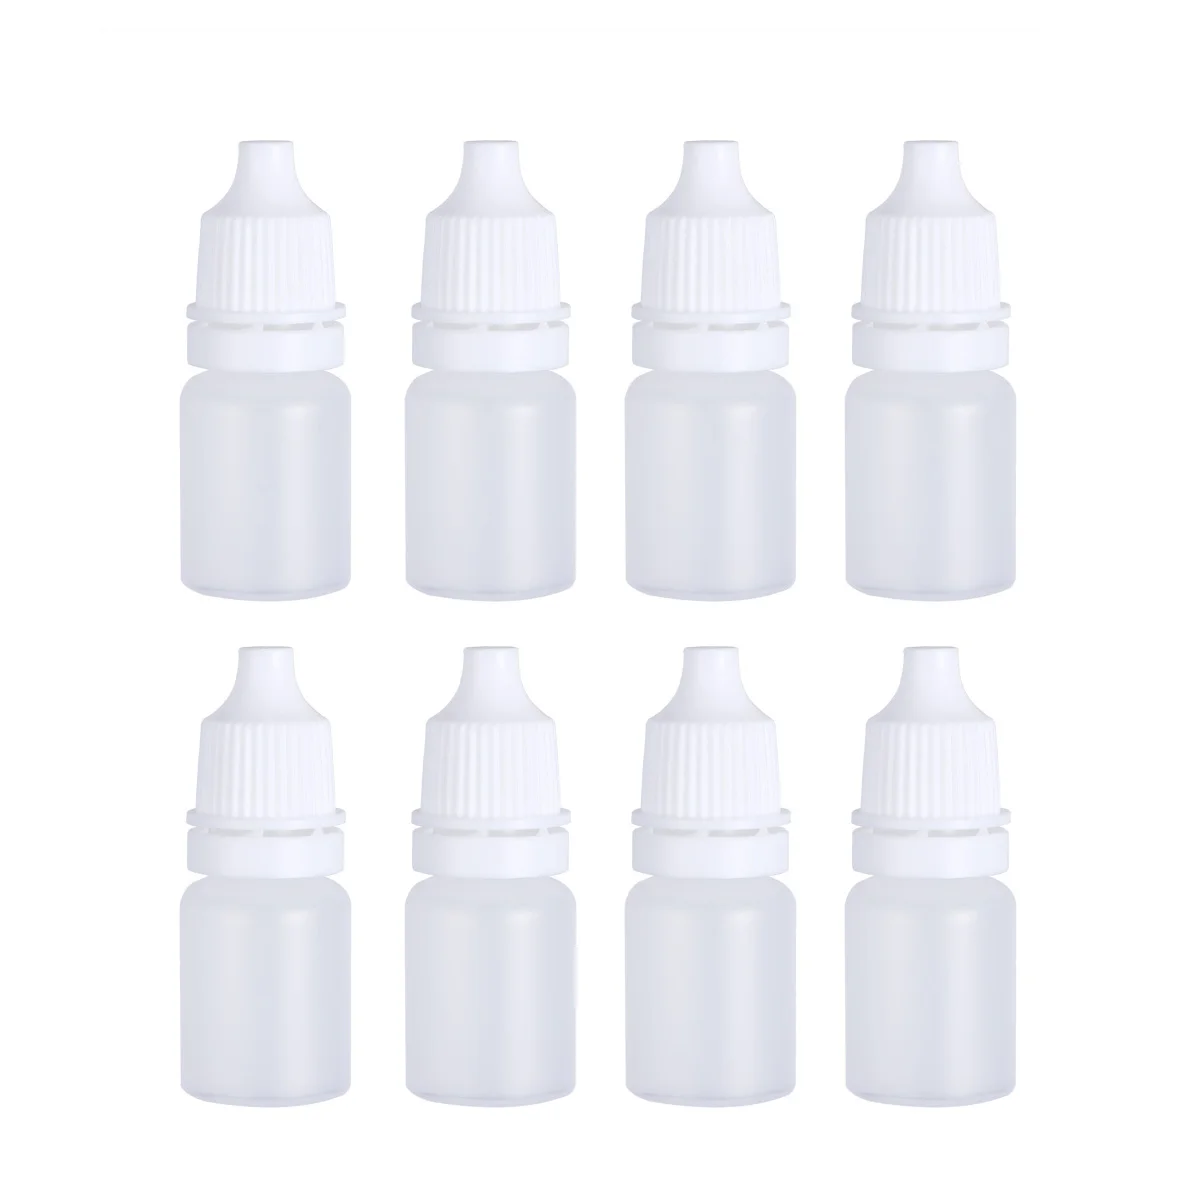 

30Pcs Squeezable Dropper Bottles 5ml Empty Eye Dropper Sample Essential Oil Container Makeup Vial